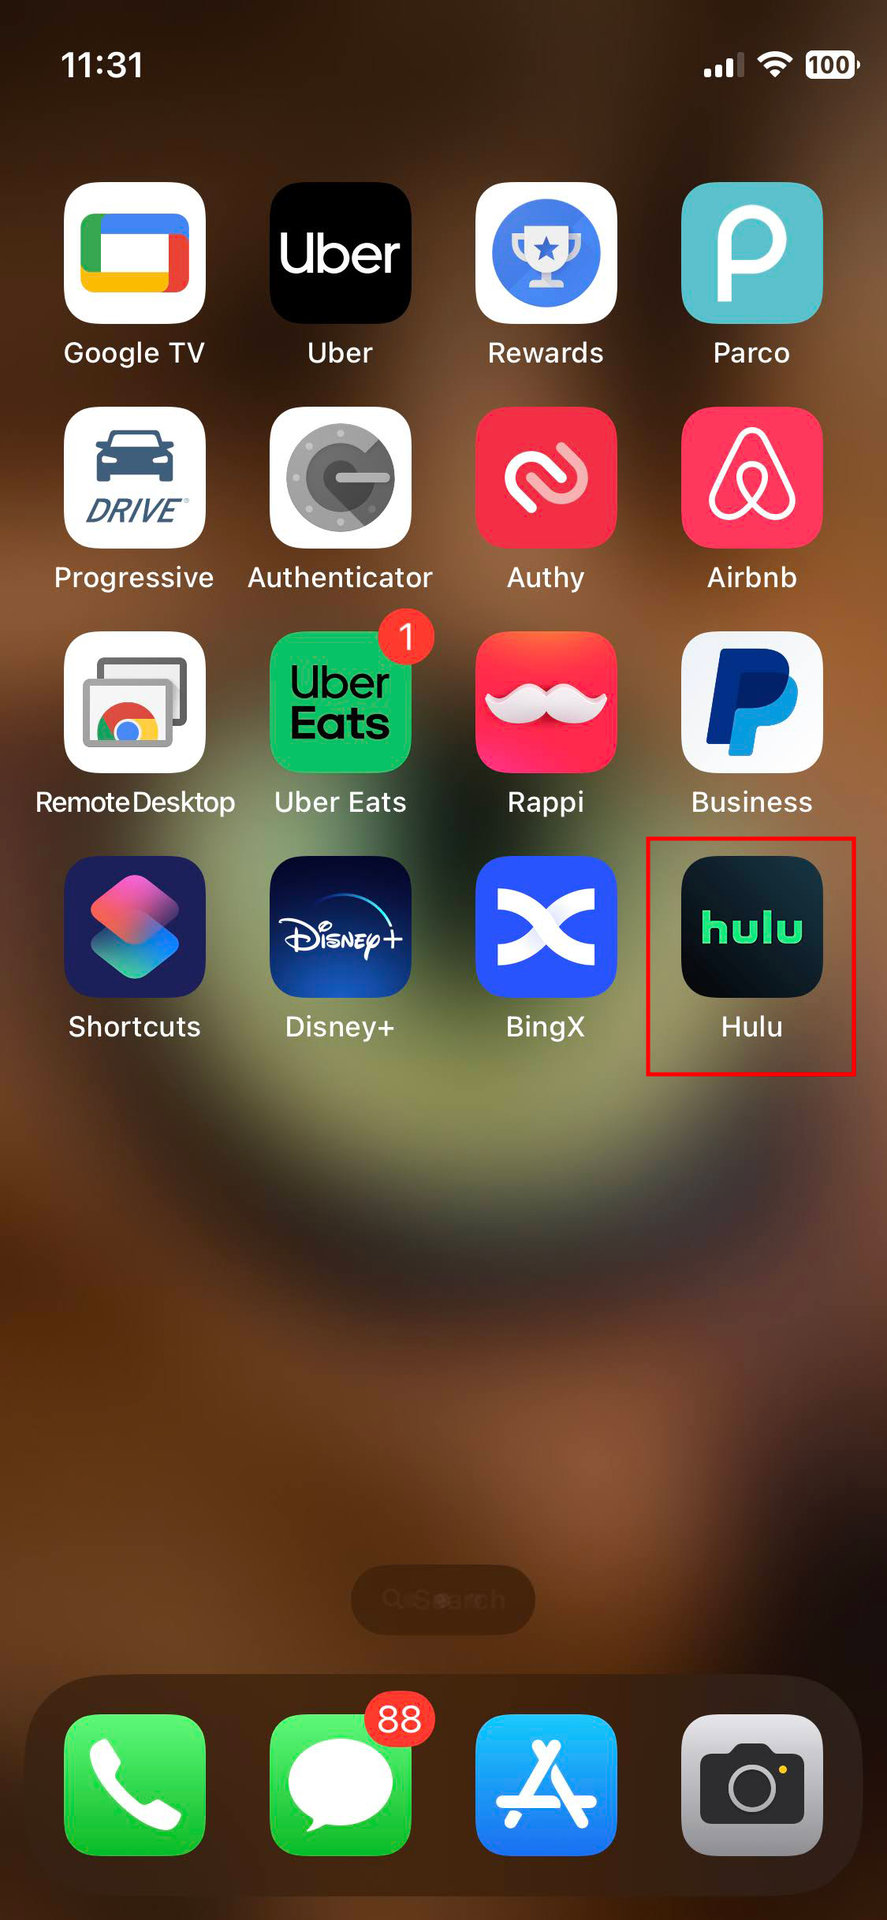 How to uninstall Hulu on iOS 1